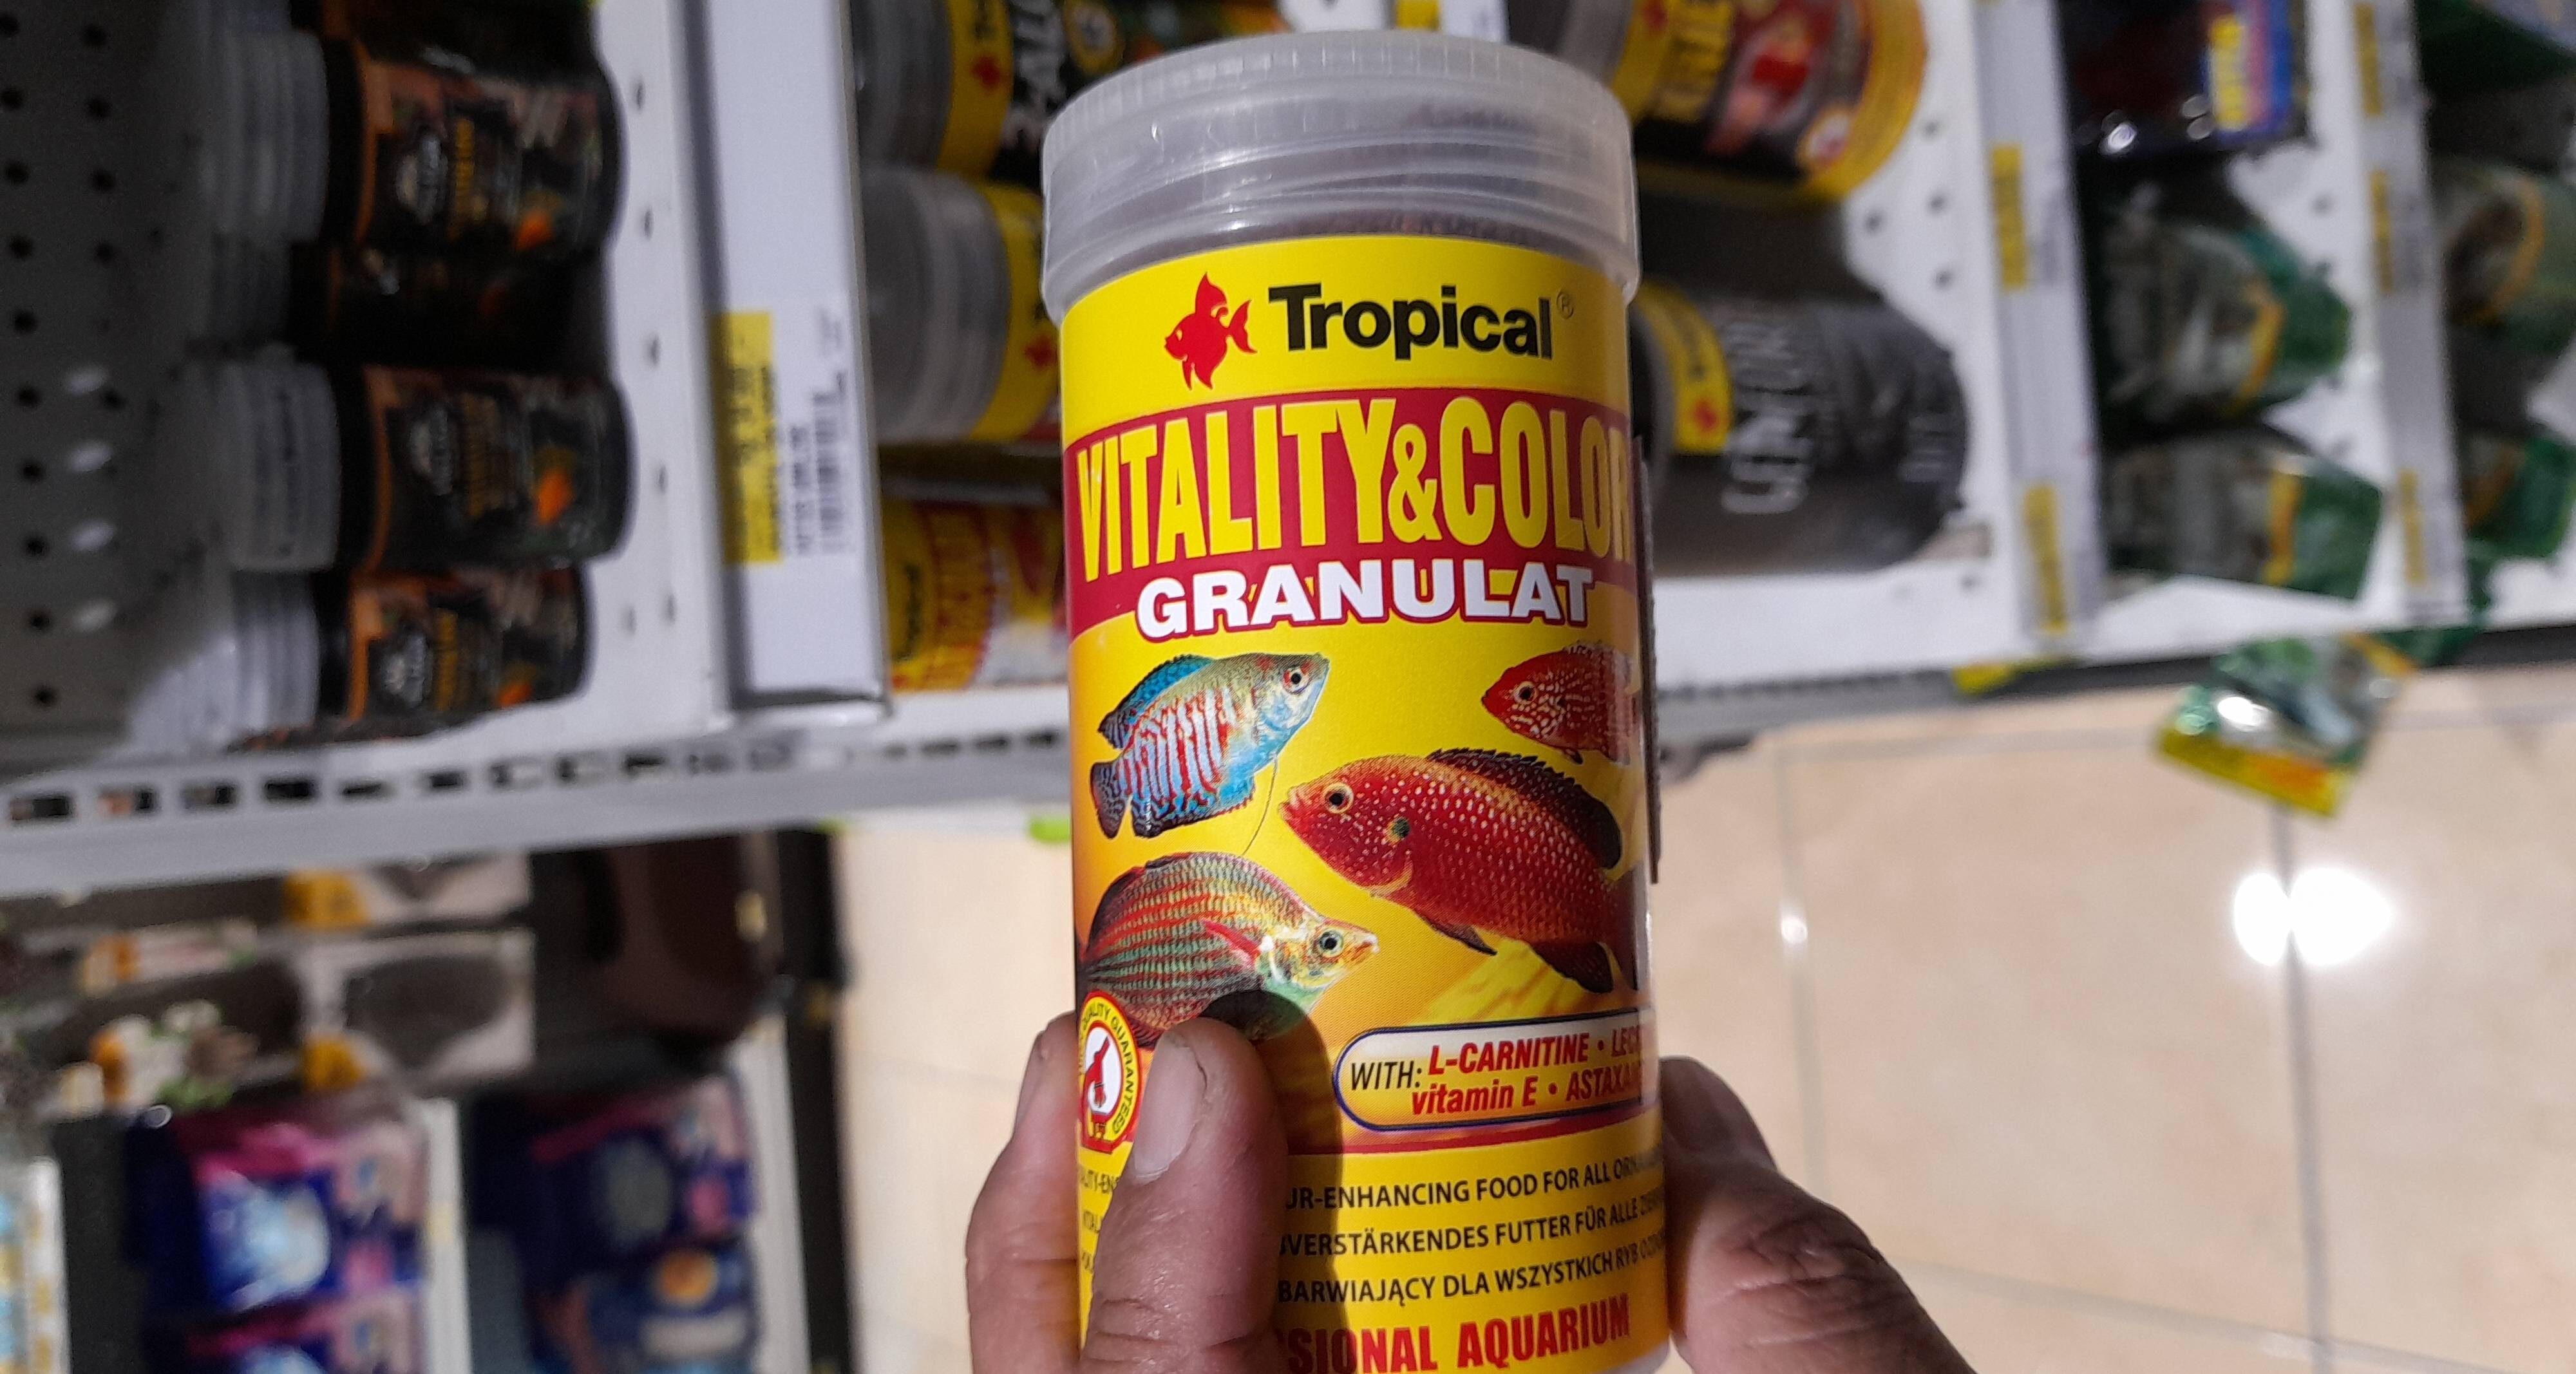 Tropical vitality & color granulat 250 ml - Product - en